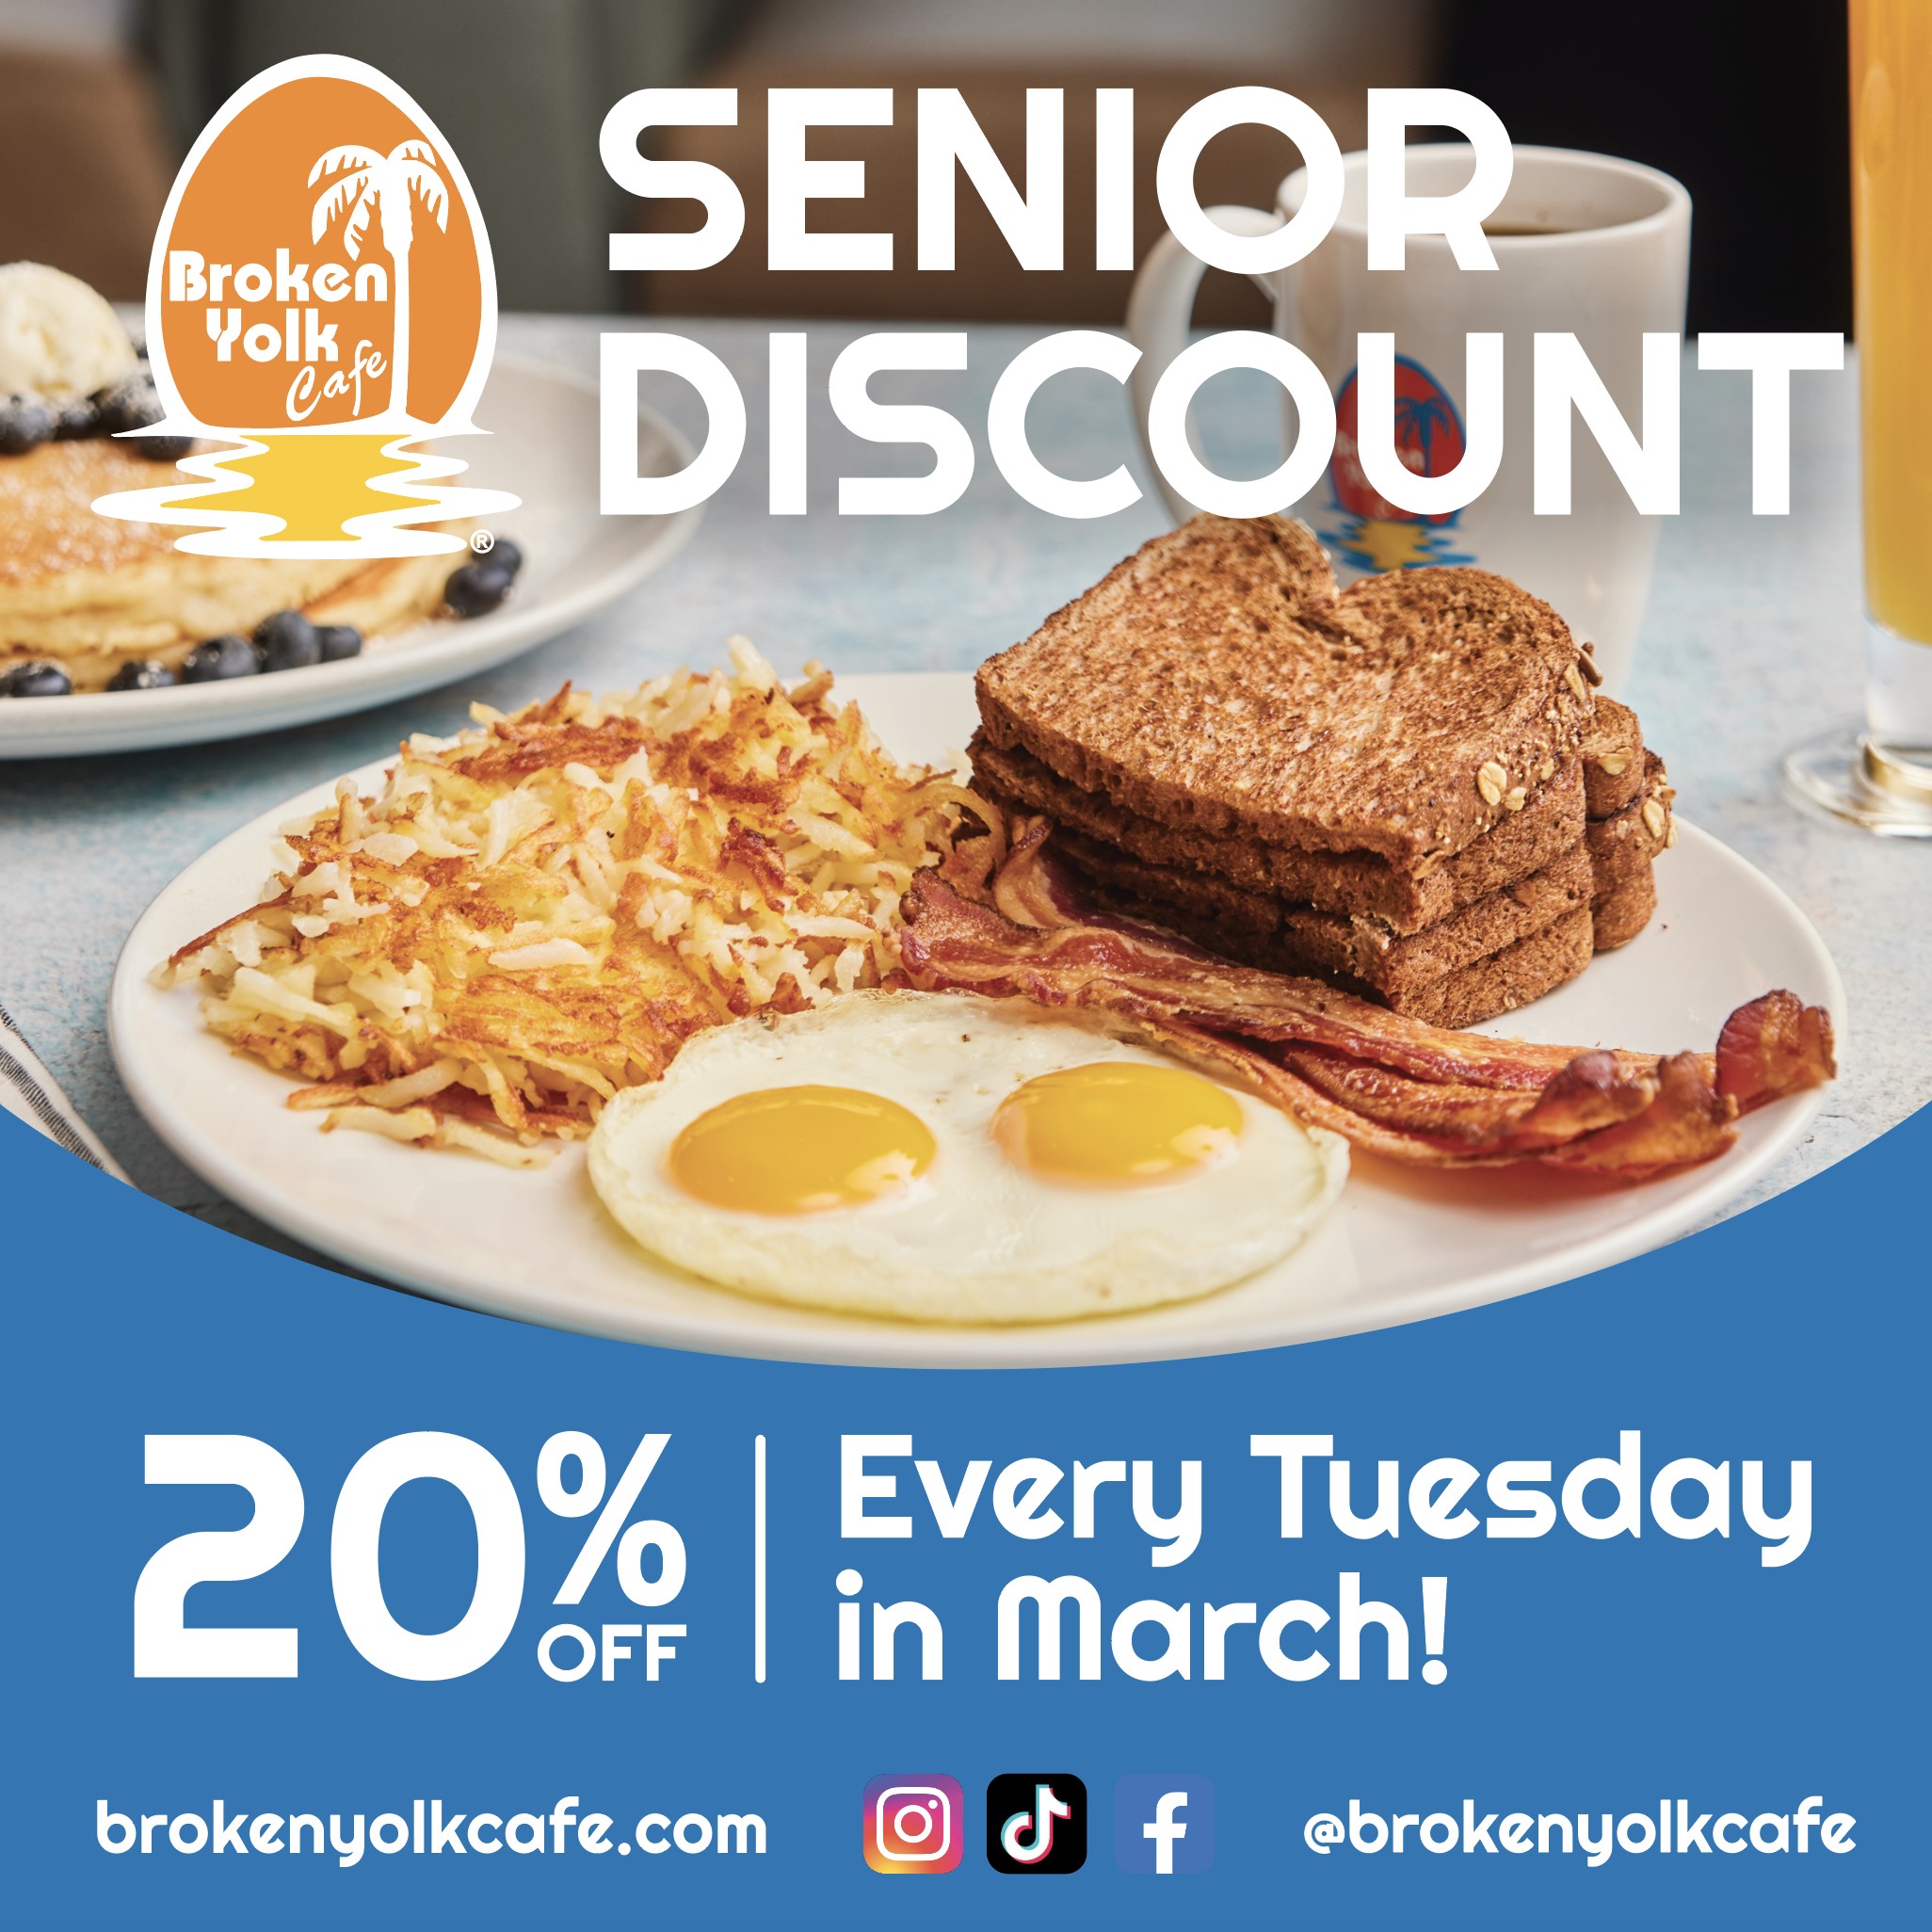 Broken Yolk Senior Discount!